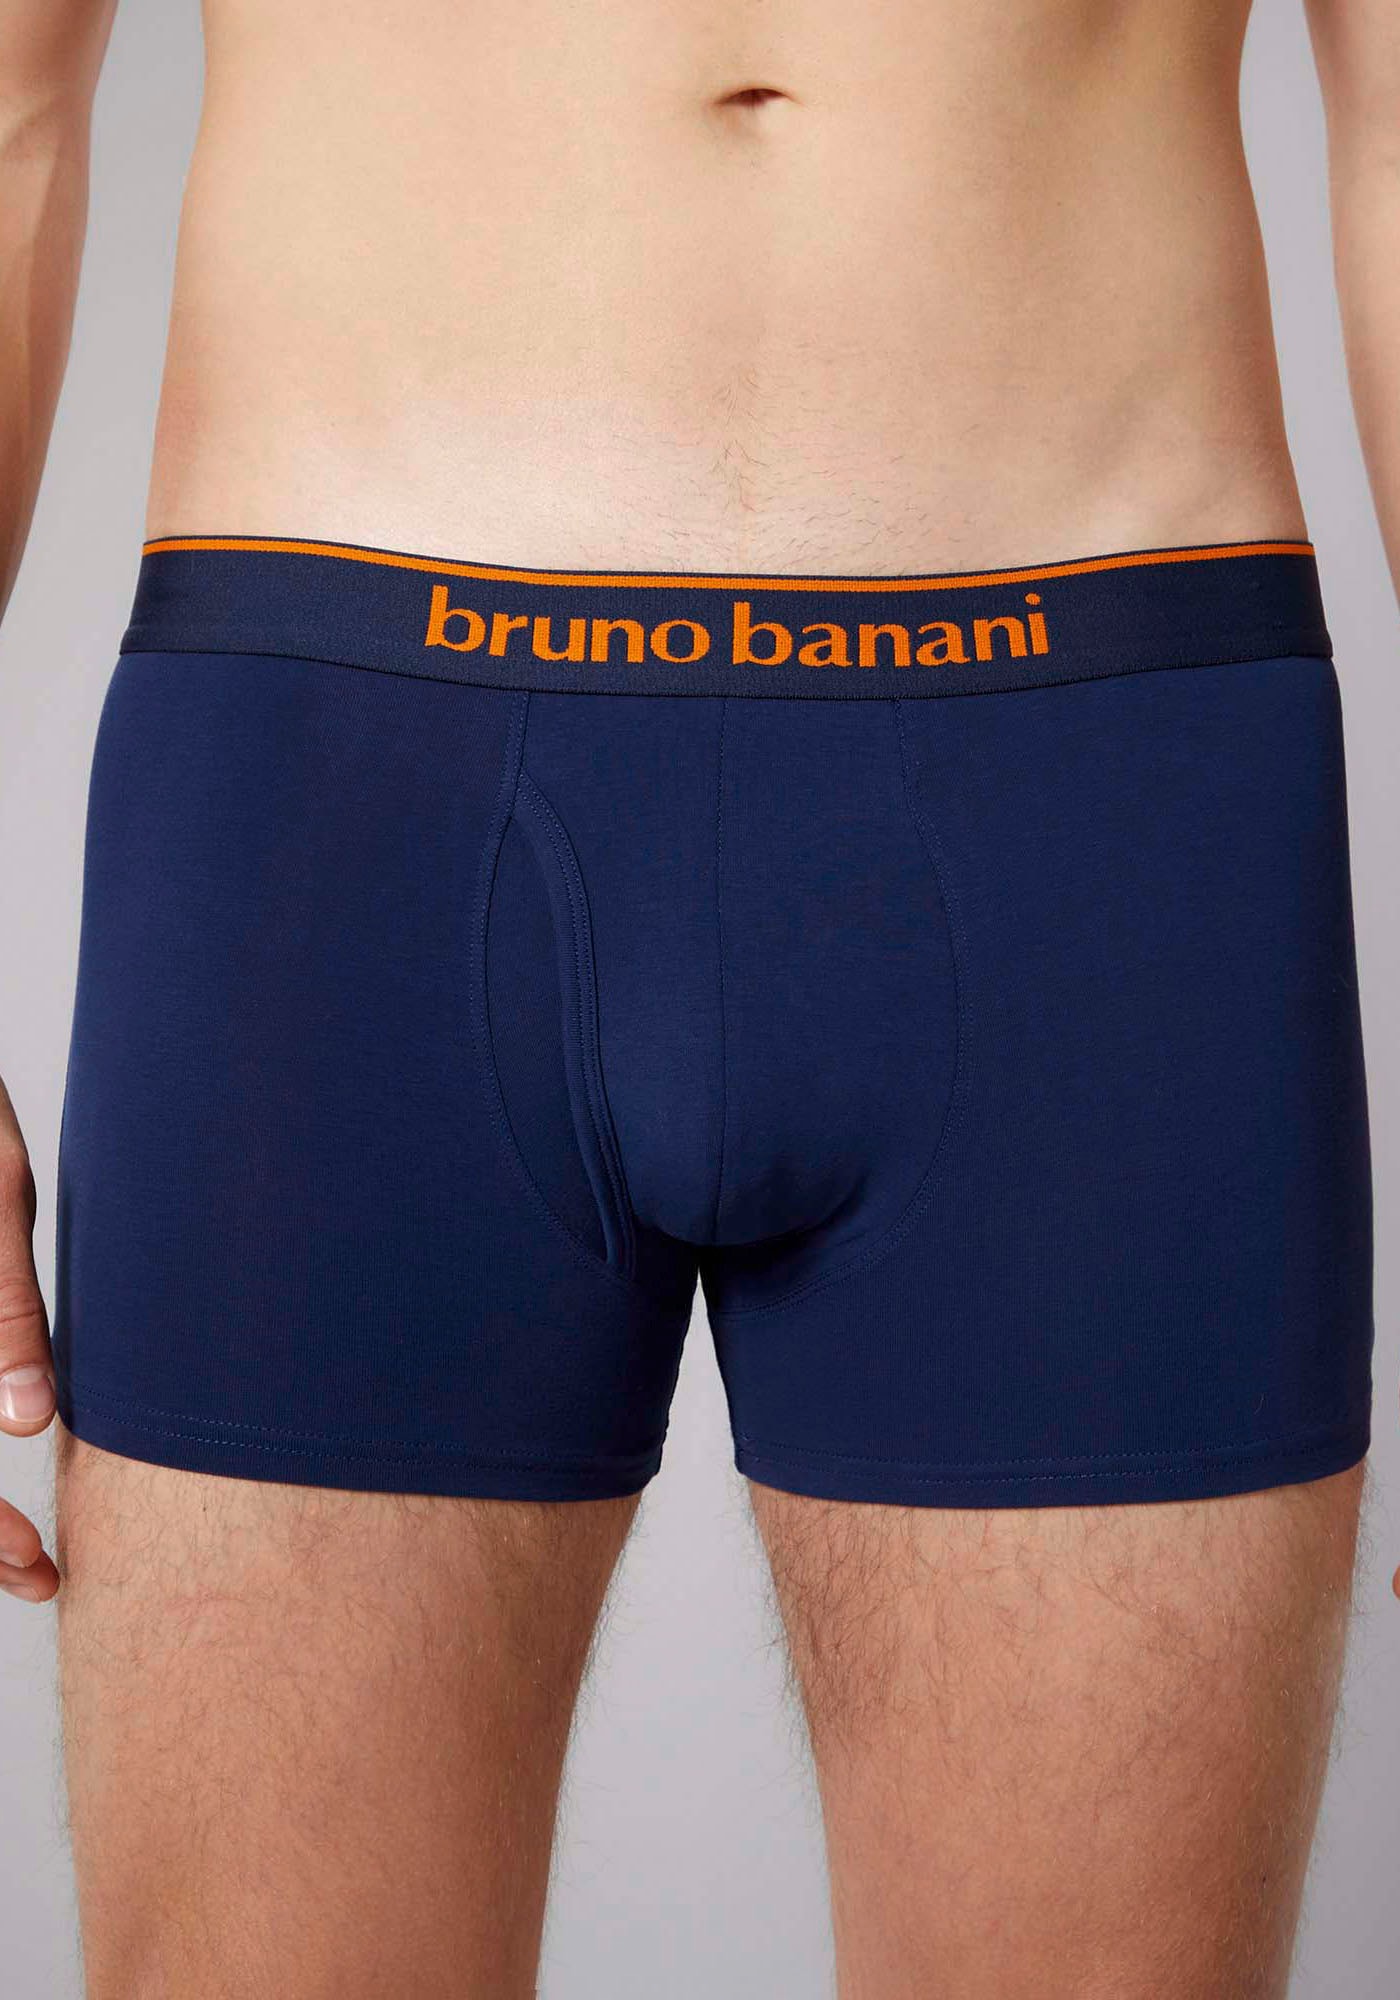 Bruno Banani Boxershorts »Short 2Pack Access«, kaufen Quick (Packung, 2 St.), Details Kontrastfarbene